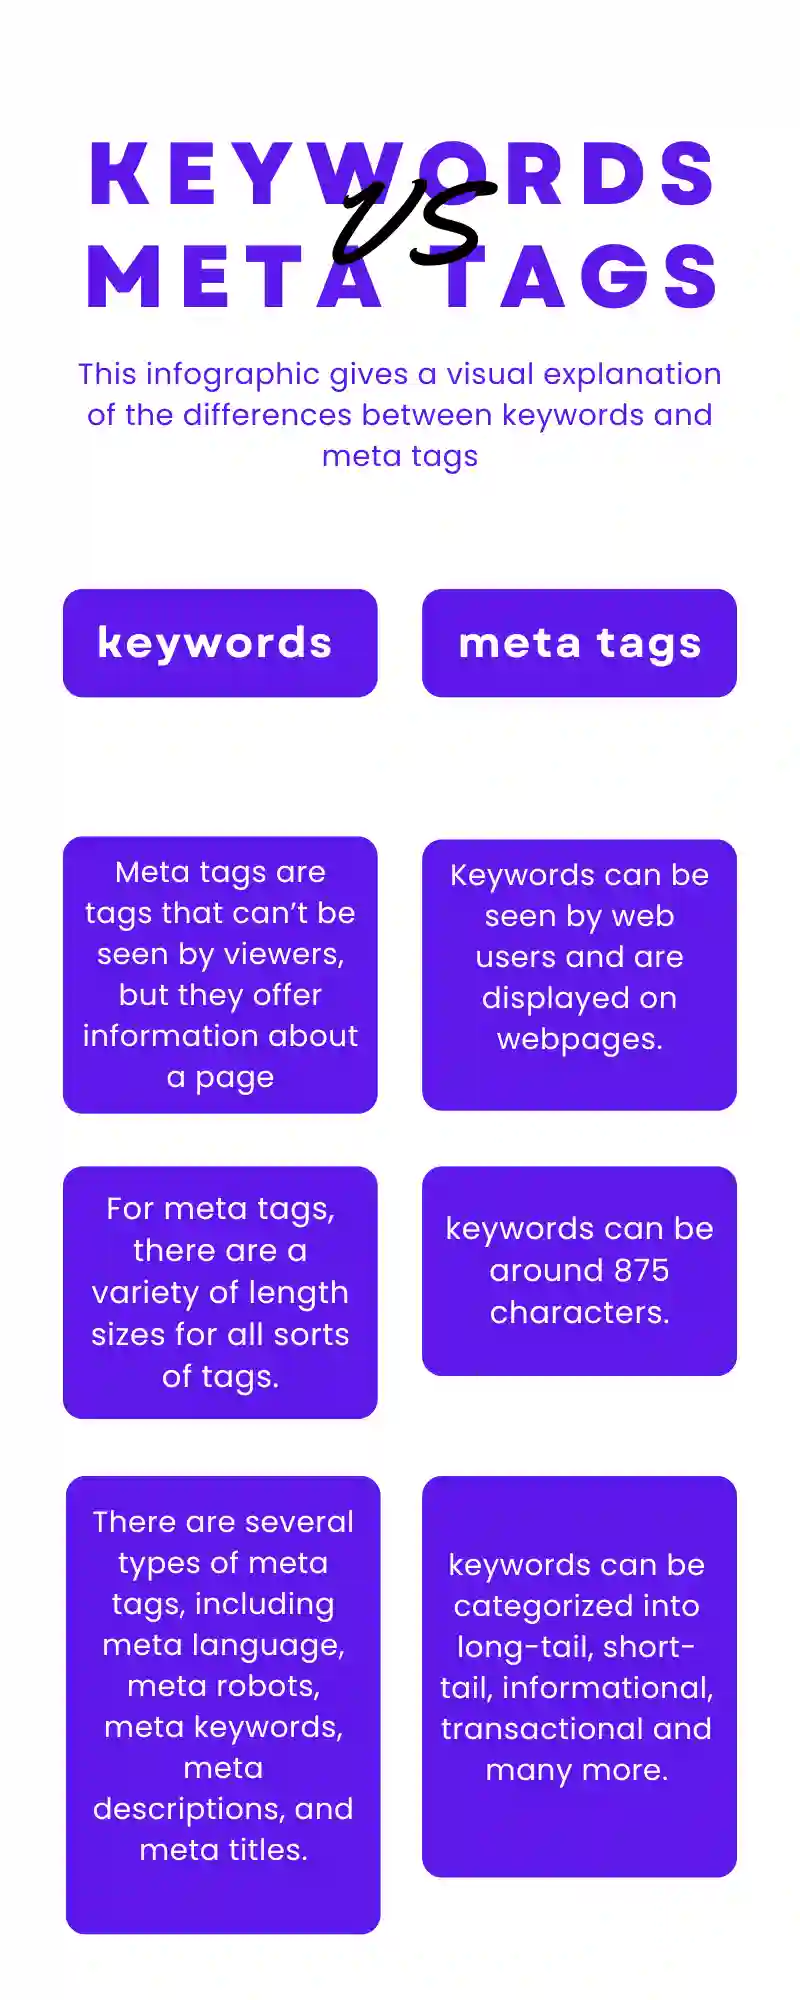 Are meta tags the same as keywords?